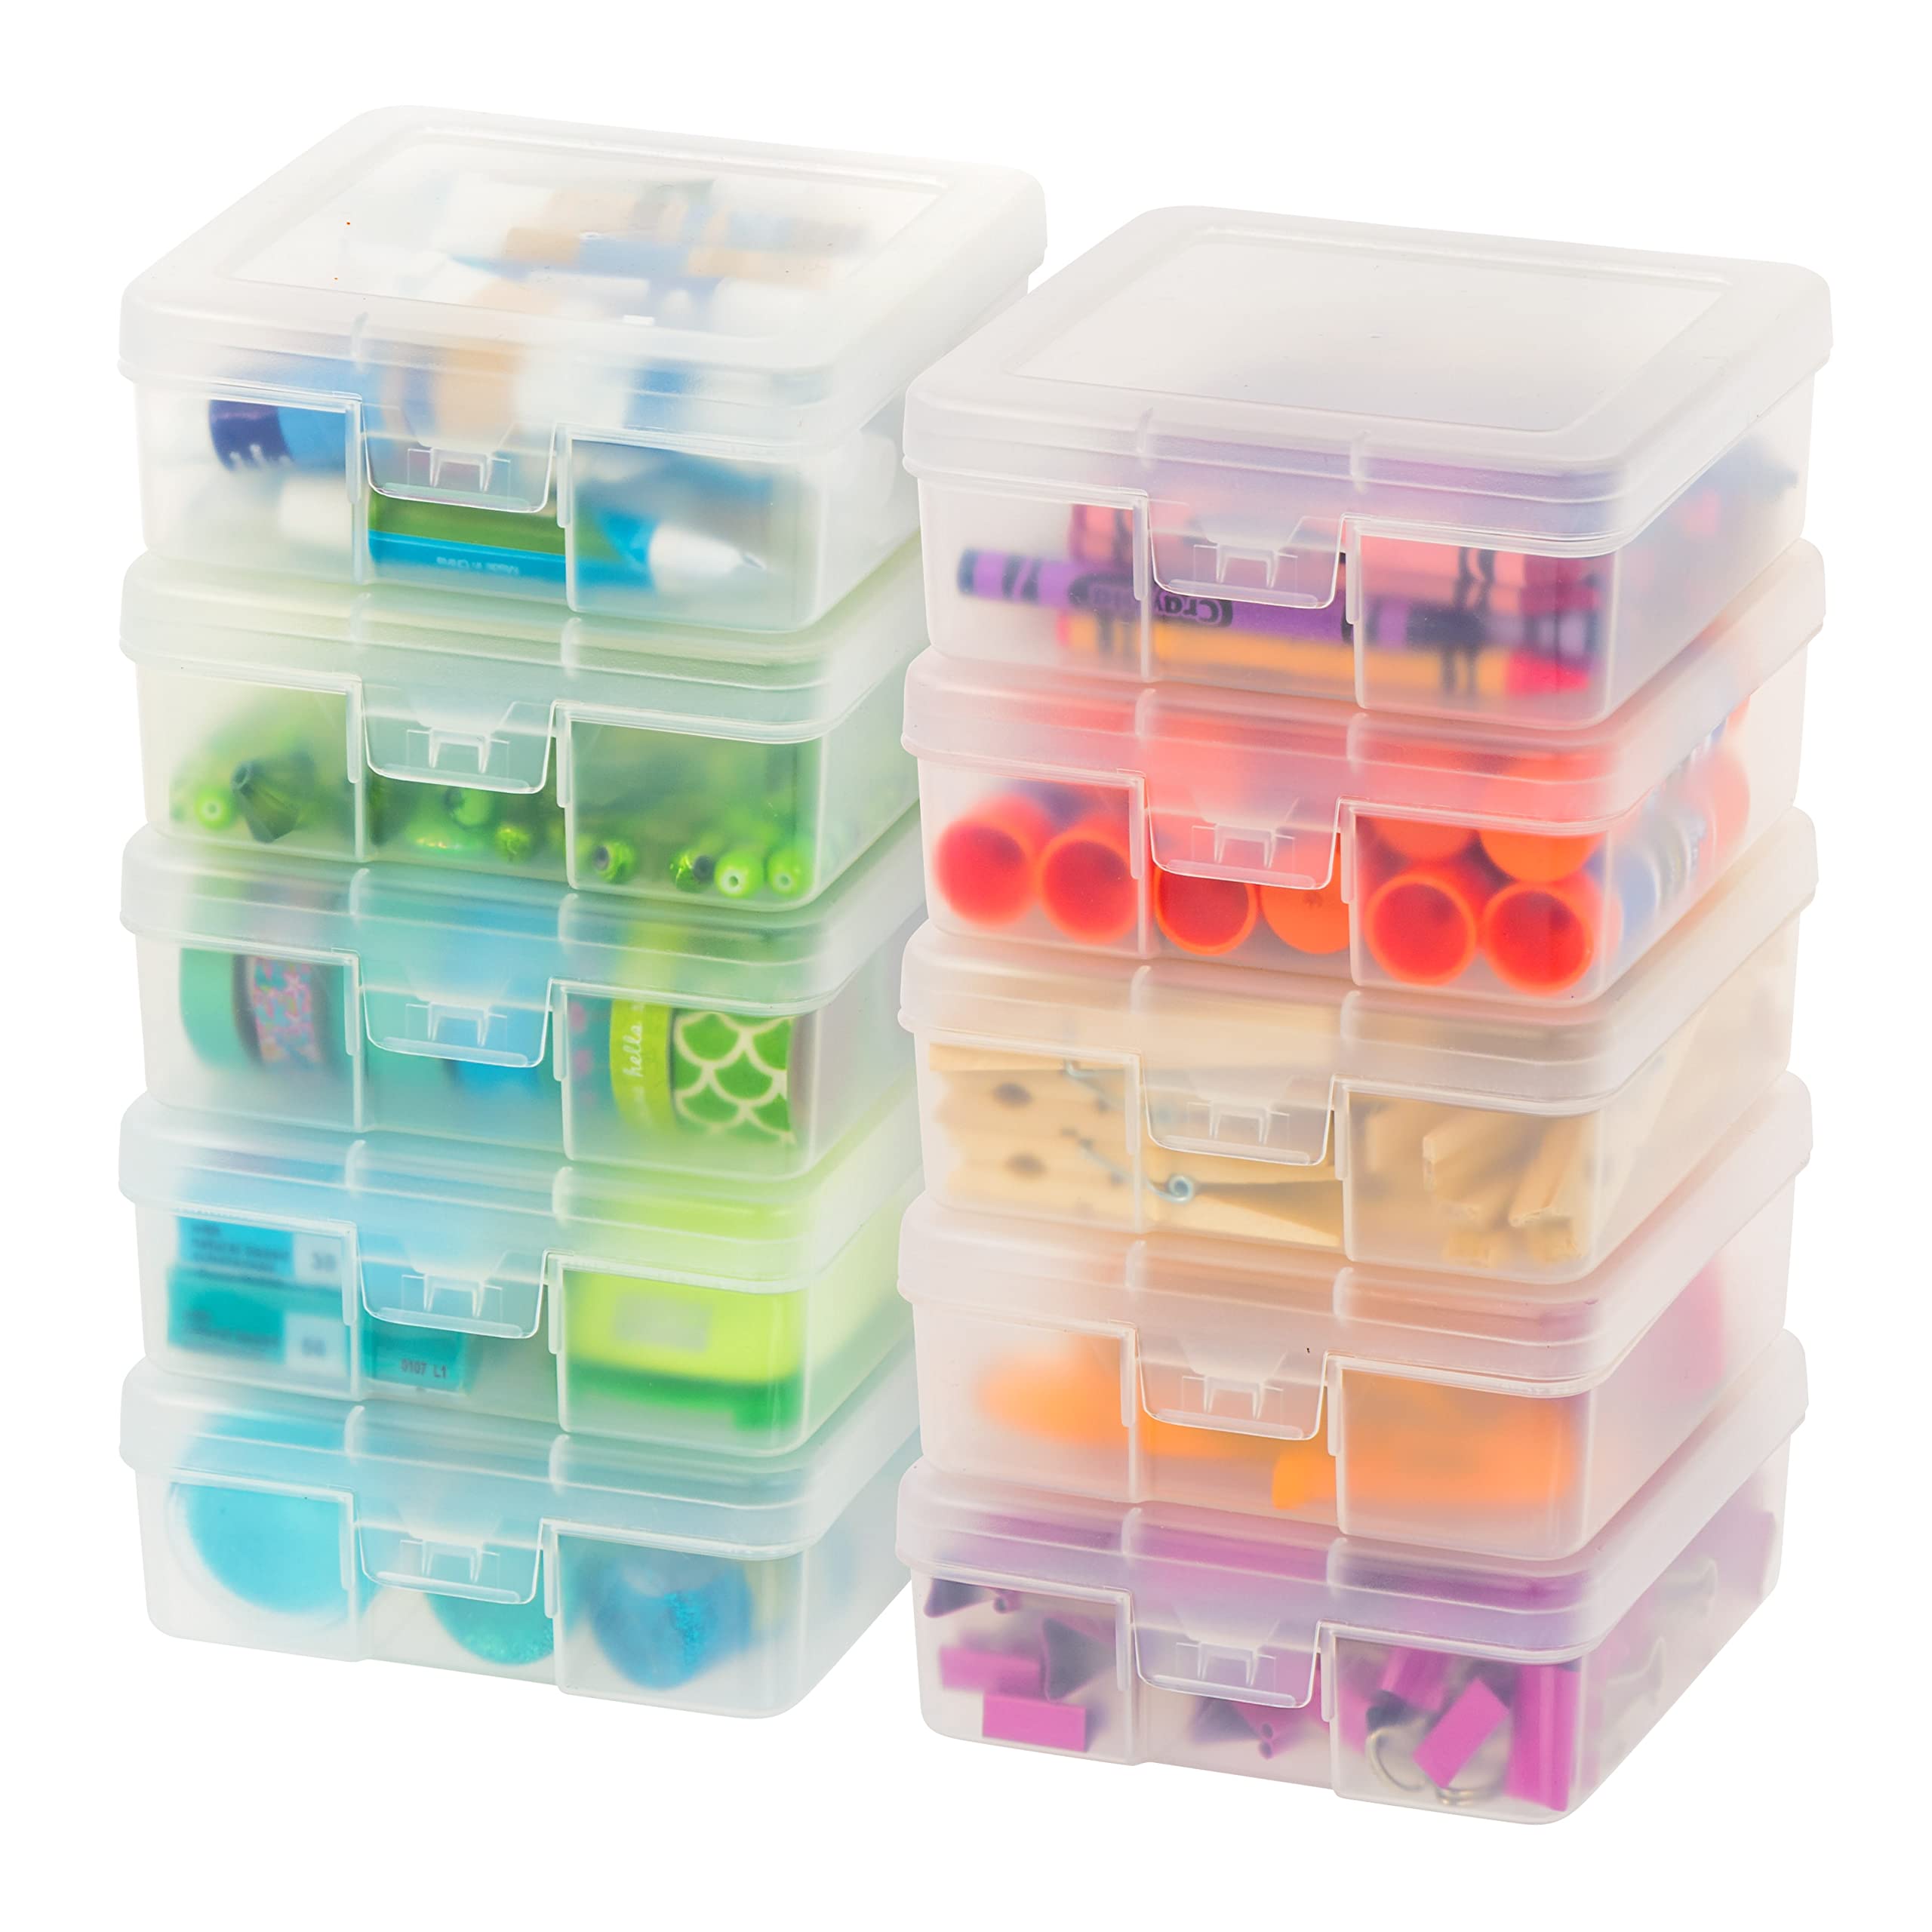 Casewin Plastic Storage Baskets, Plastic Storage Boxes, Stackable